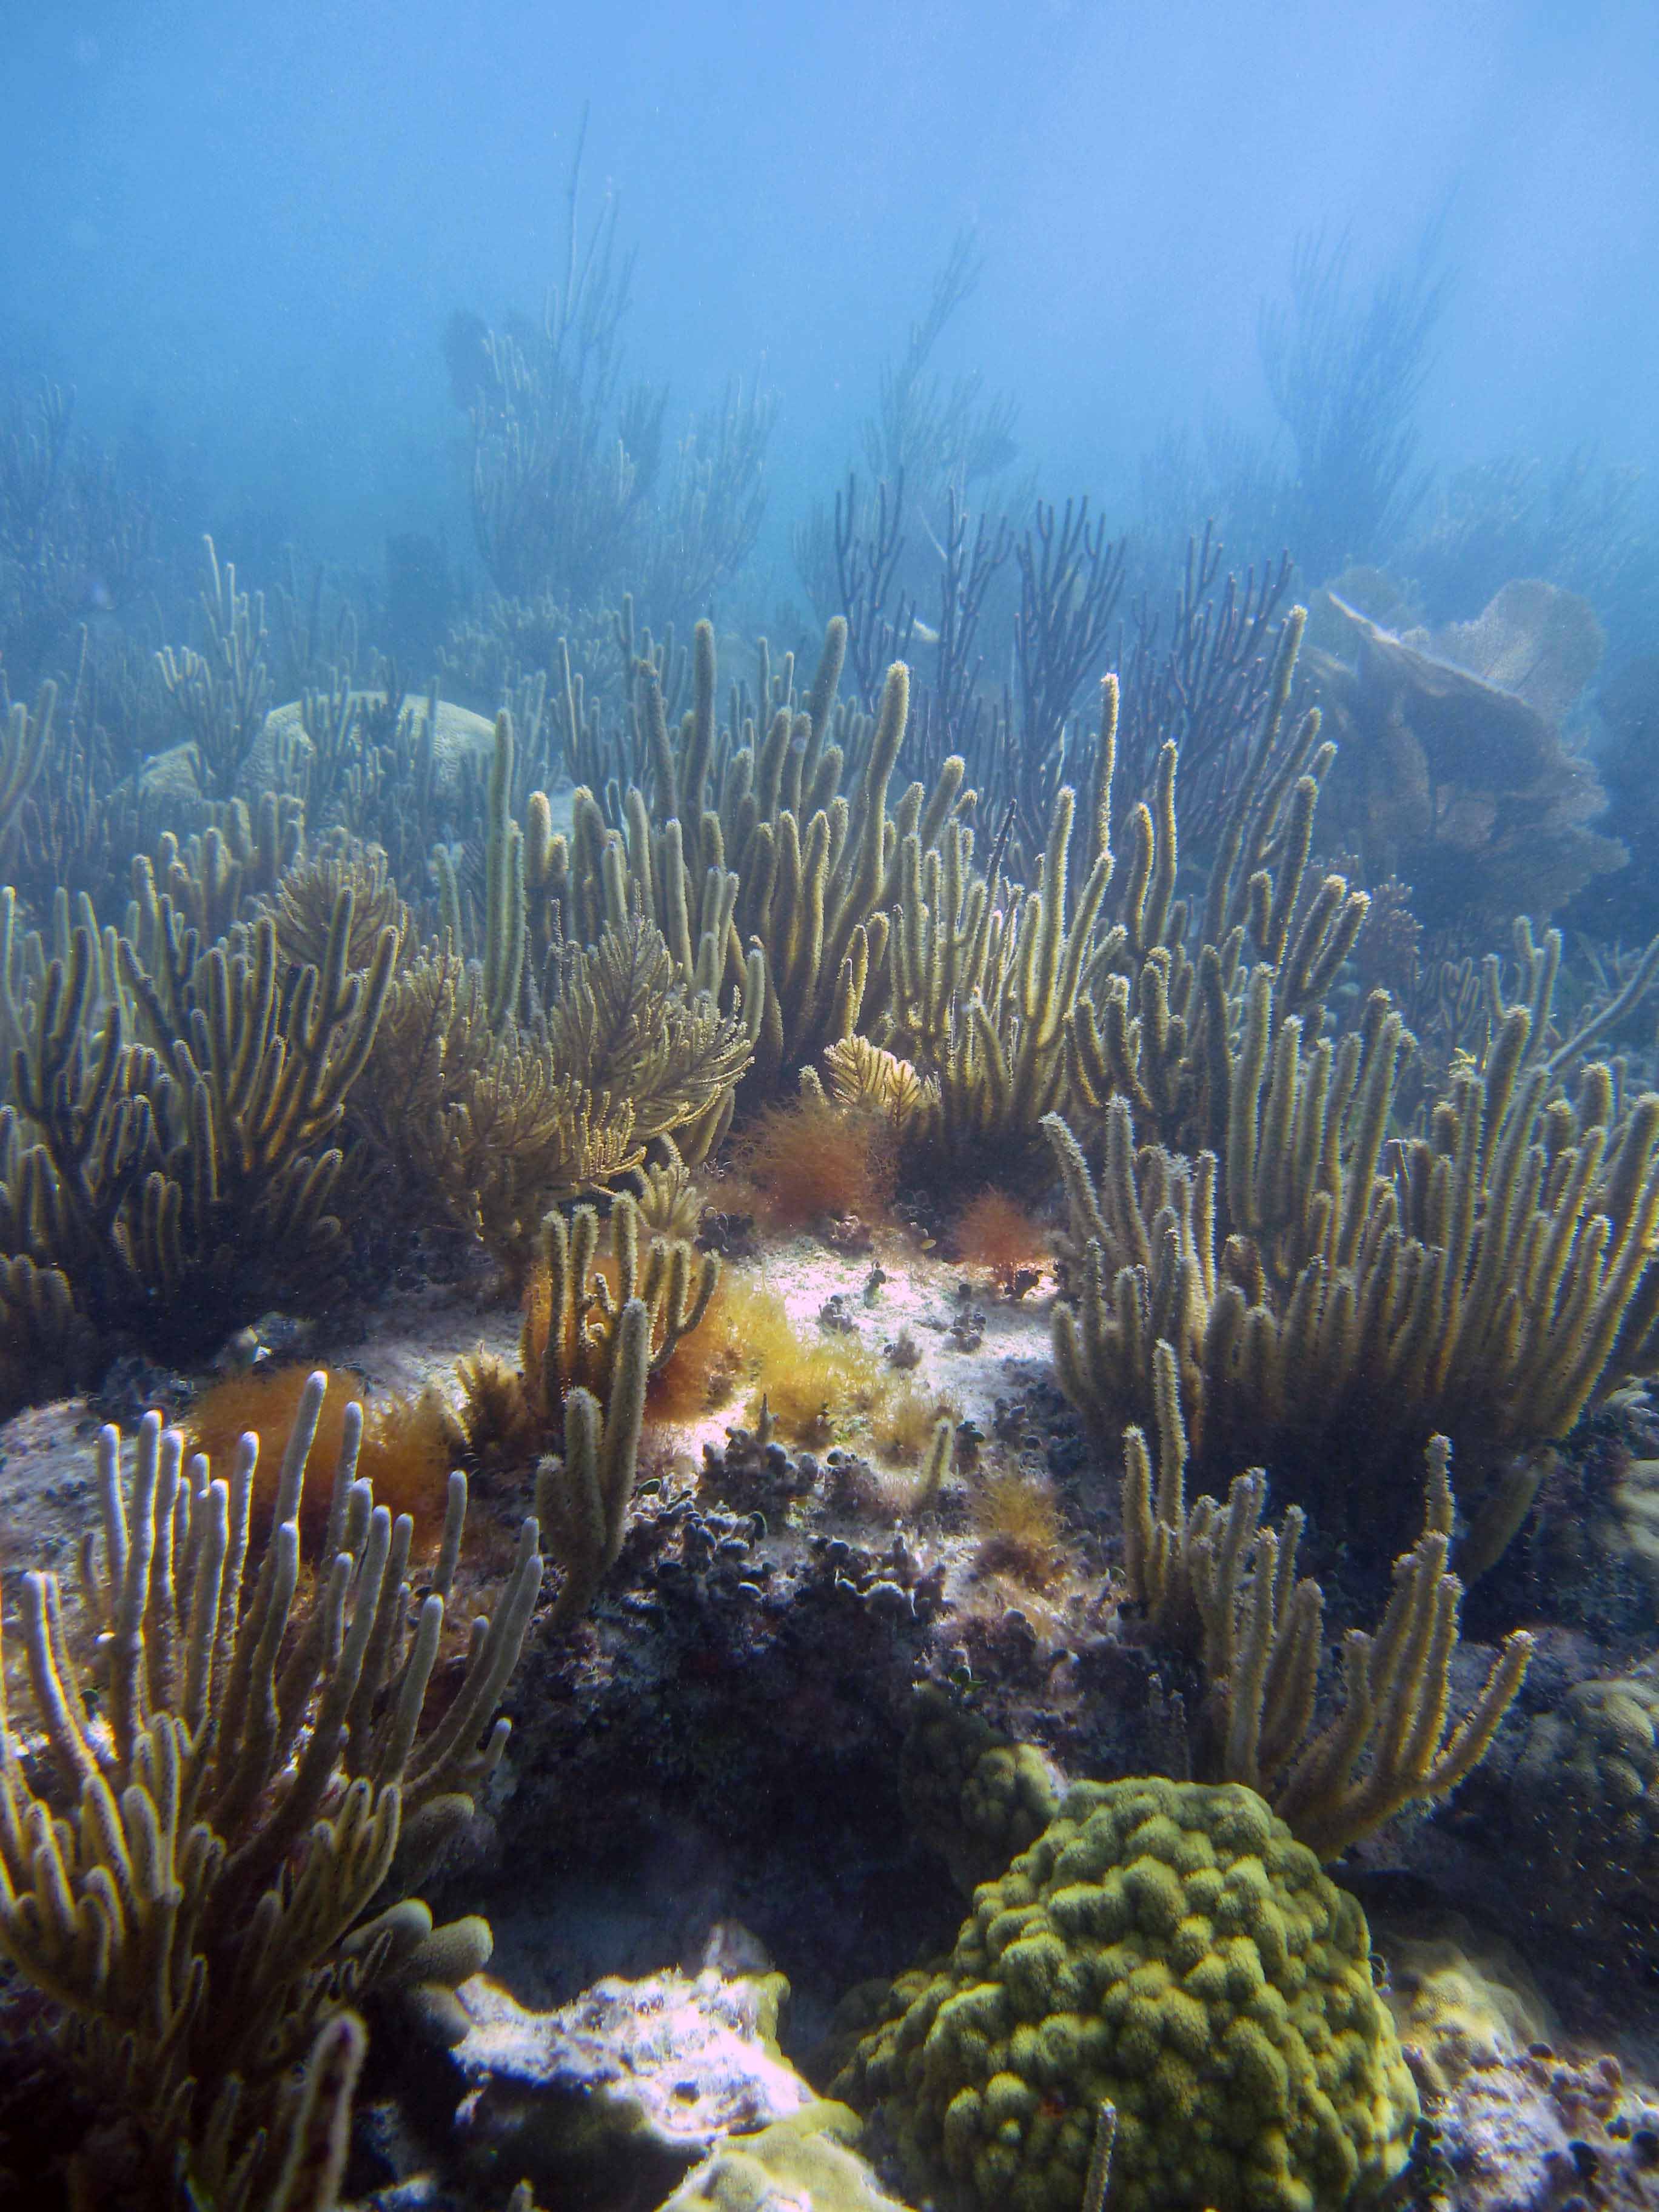 Undisturbed Reef - Photo Credit: Doug Weaver, U.S. Geological Survey